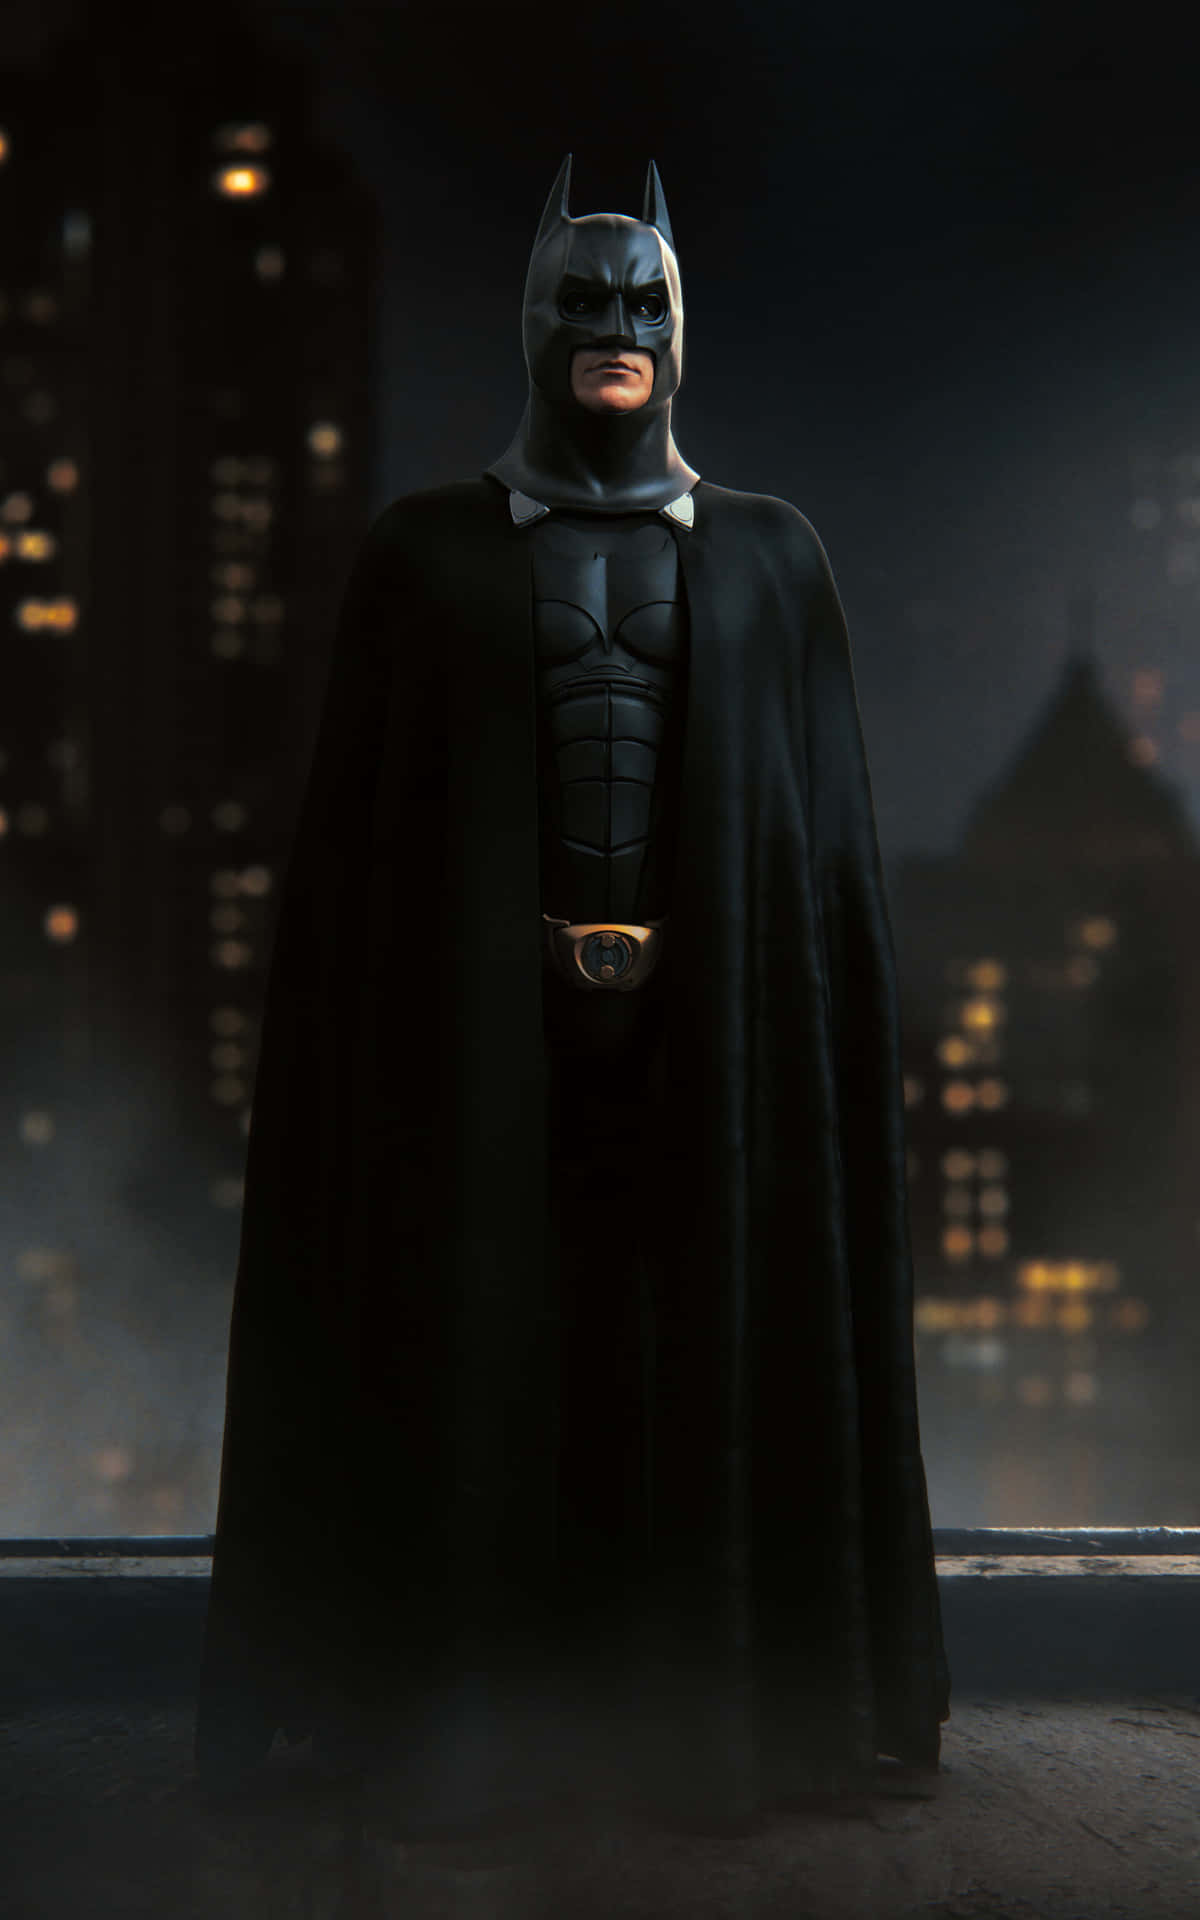 Batman standing tall amidst the darkness Wallpaper